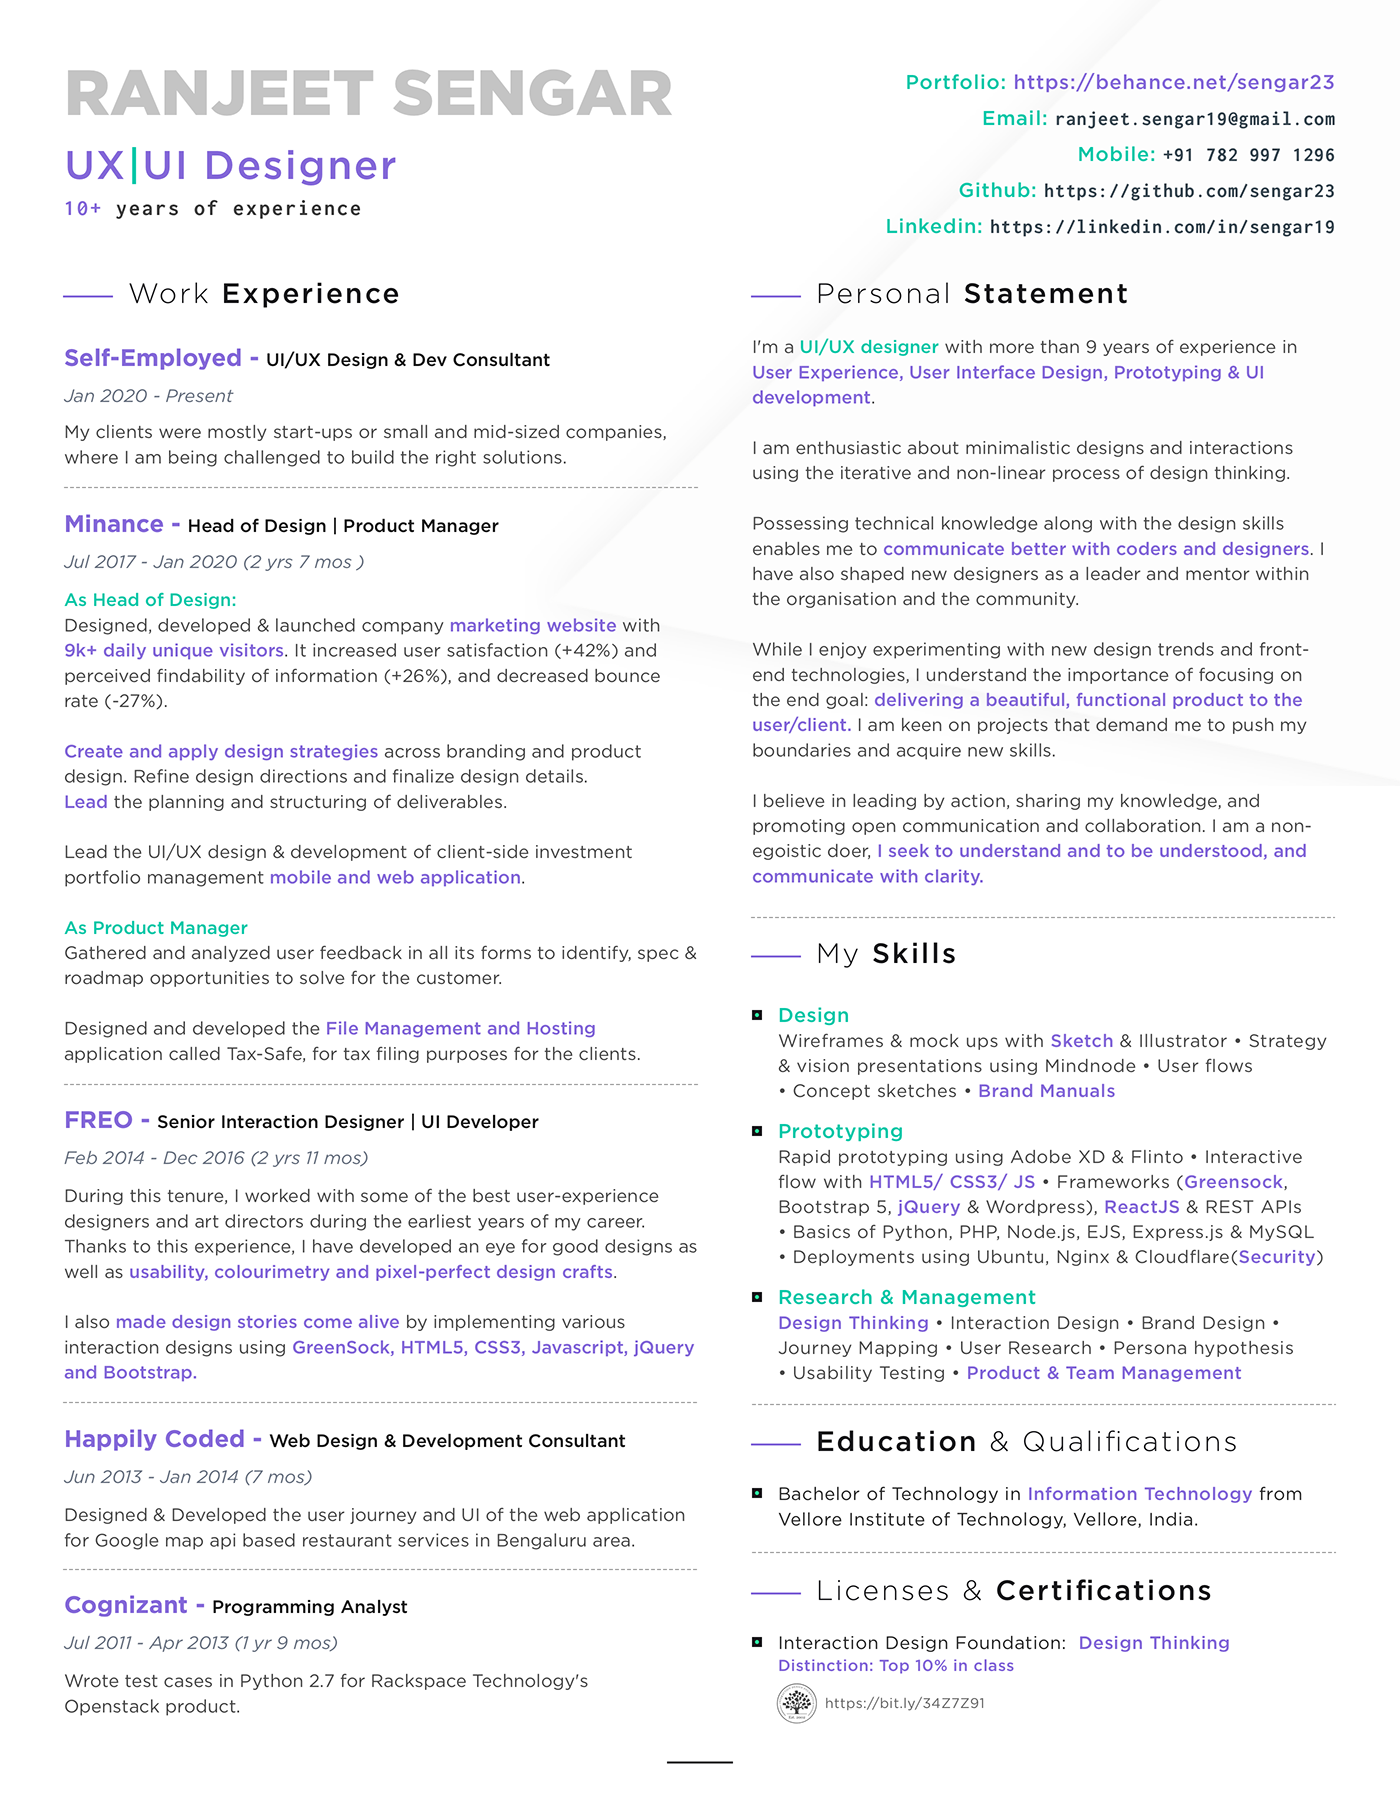 CV design resume design